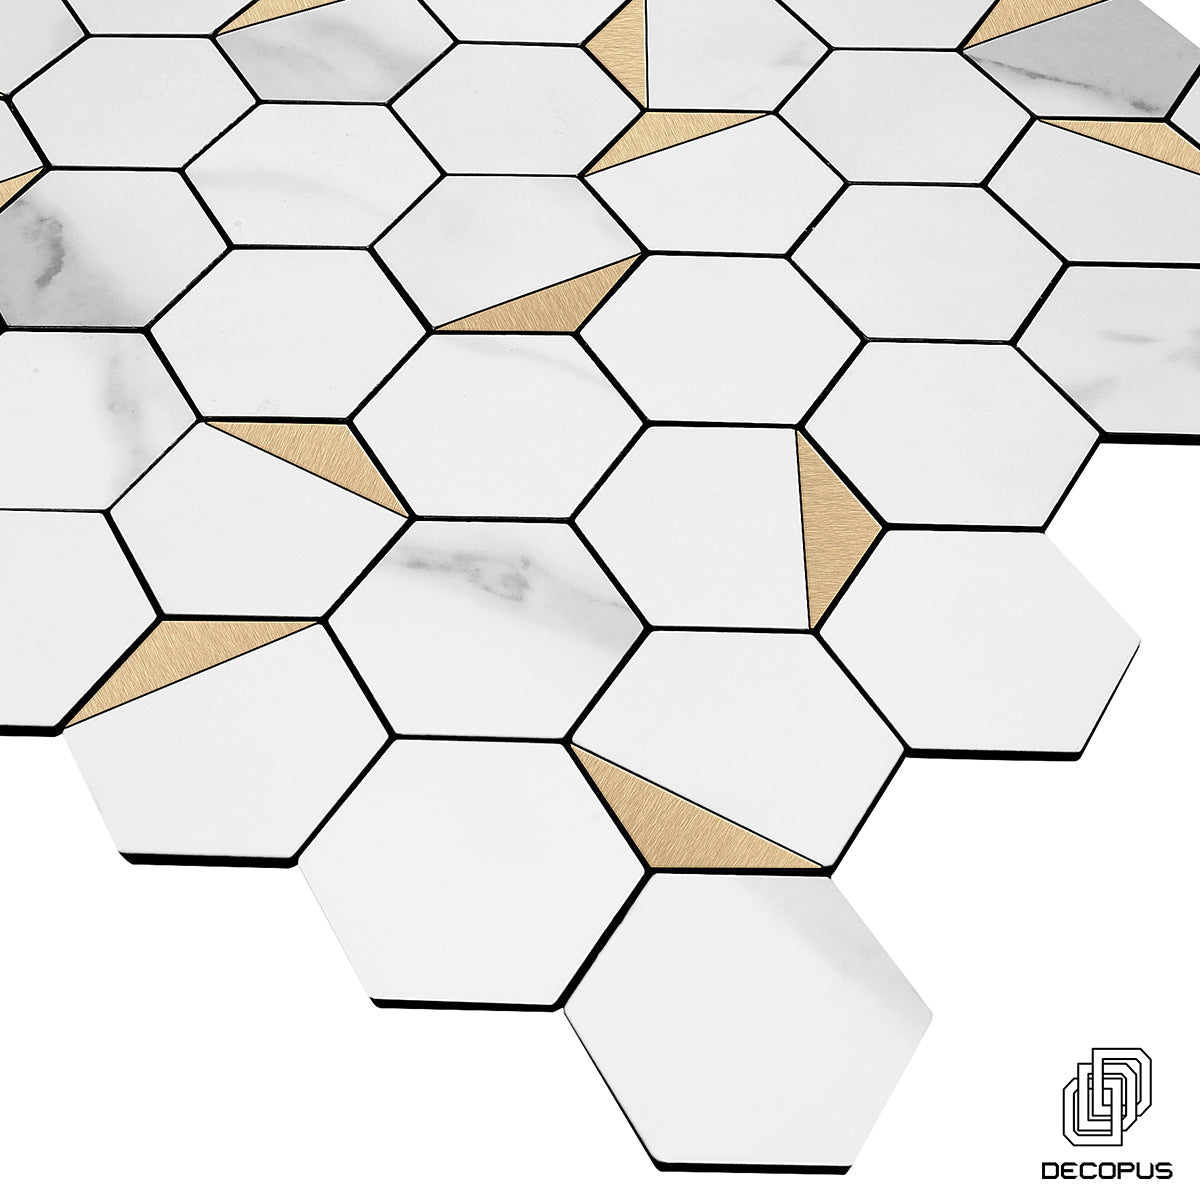 Decopus Faux Tile Peel and Stick Mosaic Tile Metal (Hexagon White Marble Gold Rim, 5pk) for Kitchen Backsplash, Bathroom Tile Self Adhesive